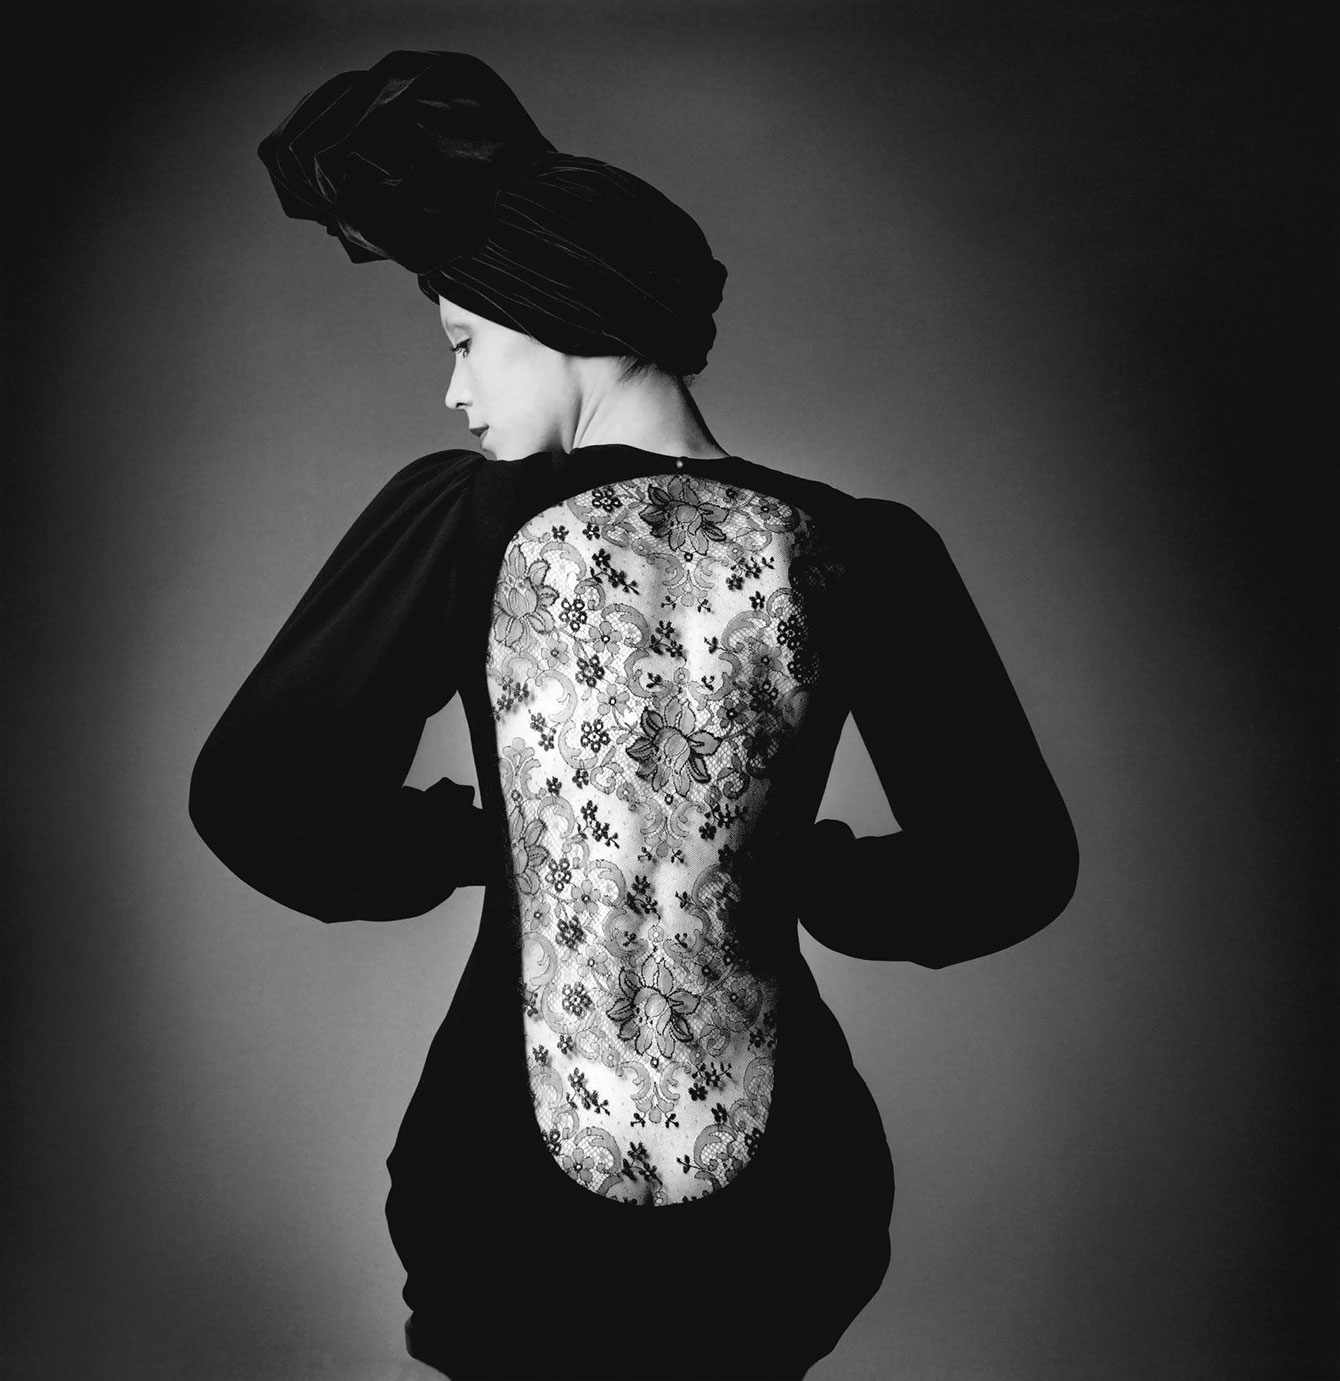 Marina Schiano, suknelė Yves Saint Laurent. Fotografas: Jeanloup Sieff. Paryžius, Vogue, 1970